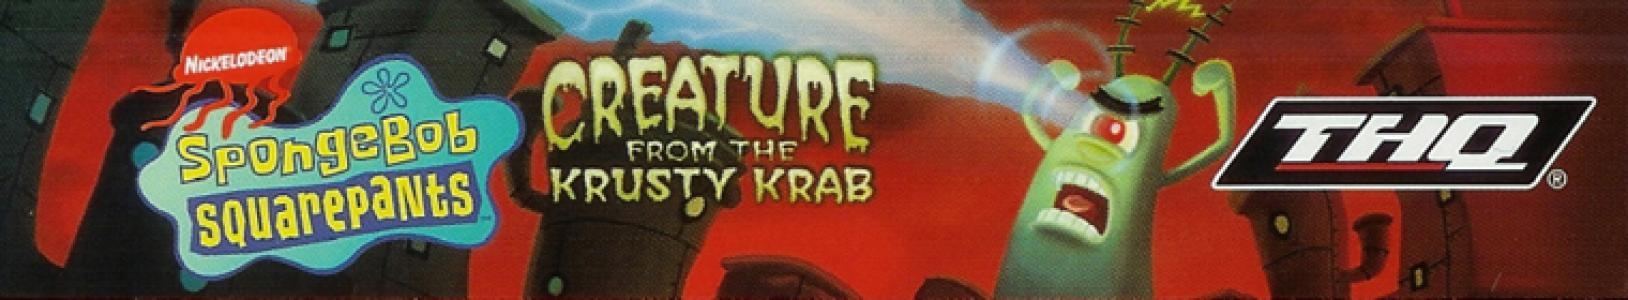 Nickelodeon SpongeBob SquarePants: Creature from the Krusty Krab banner